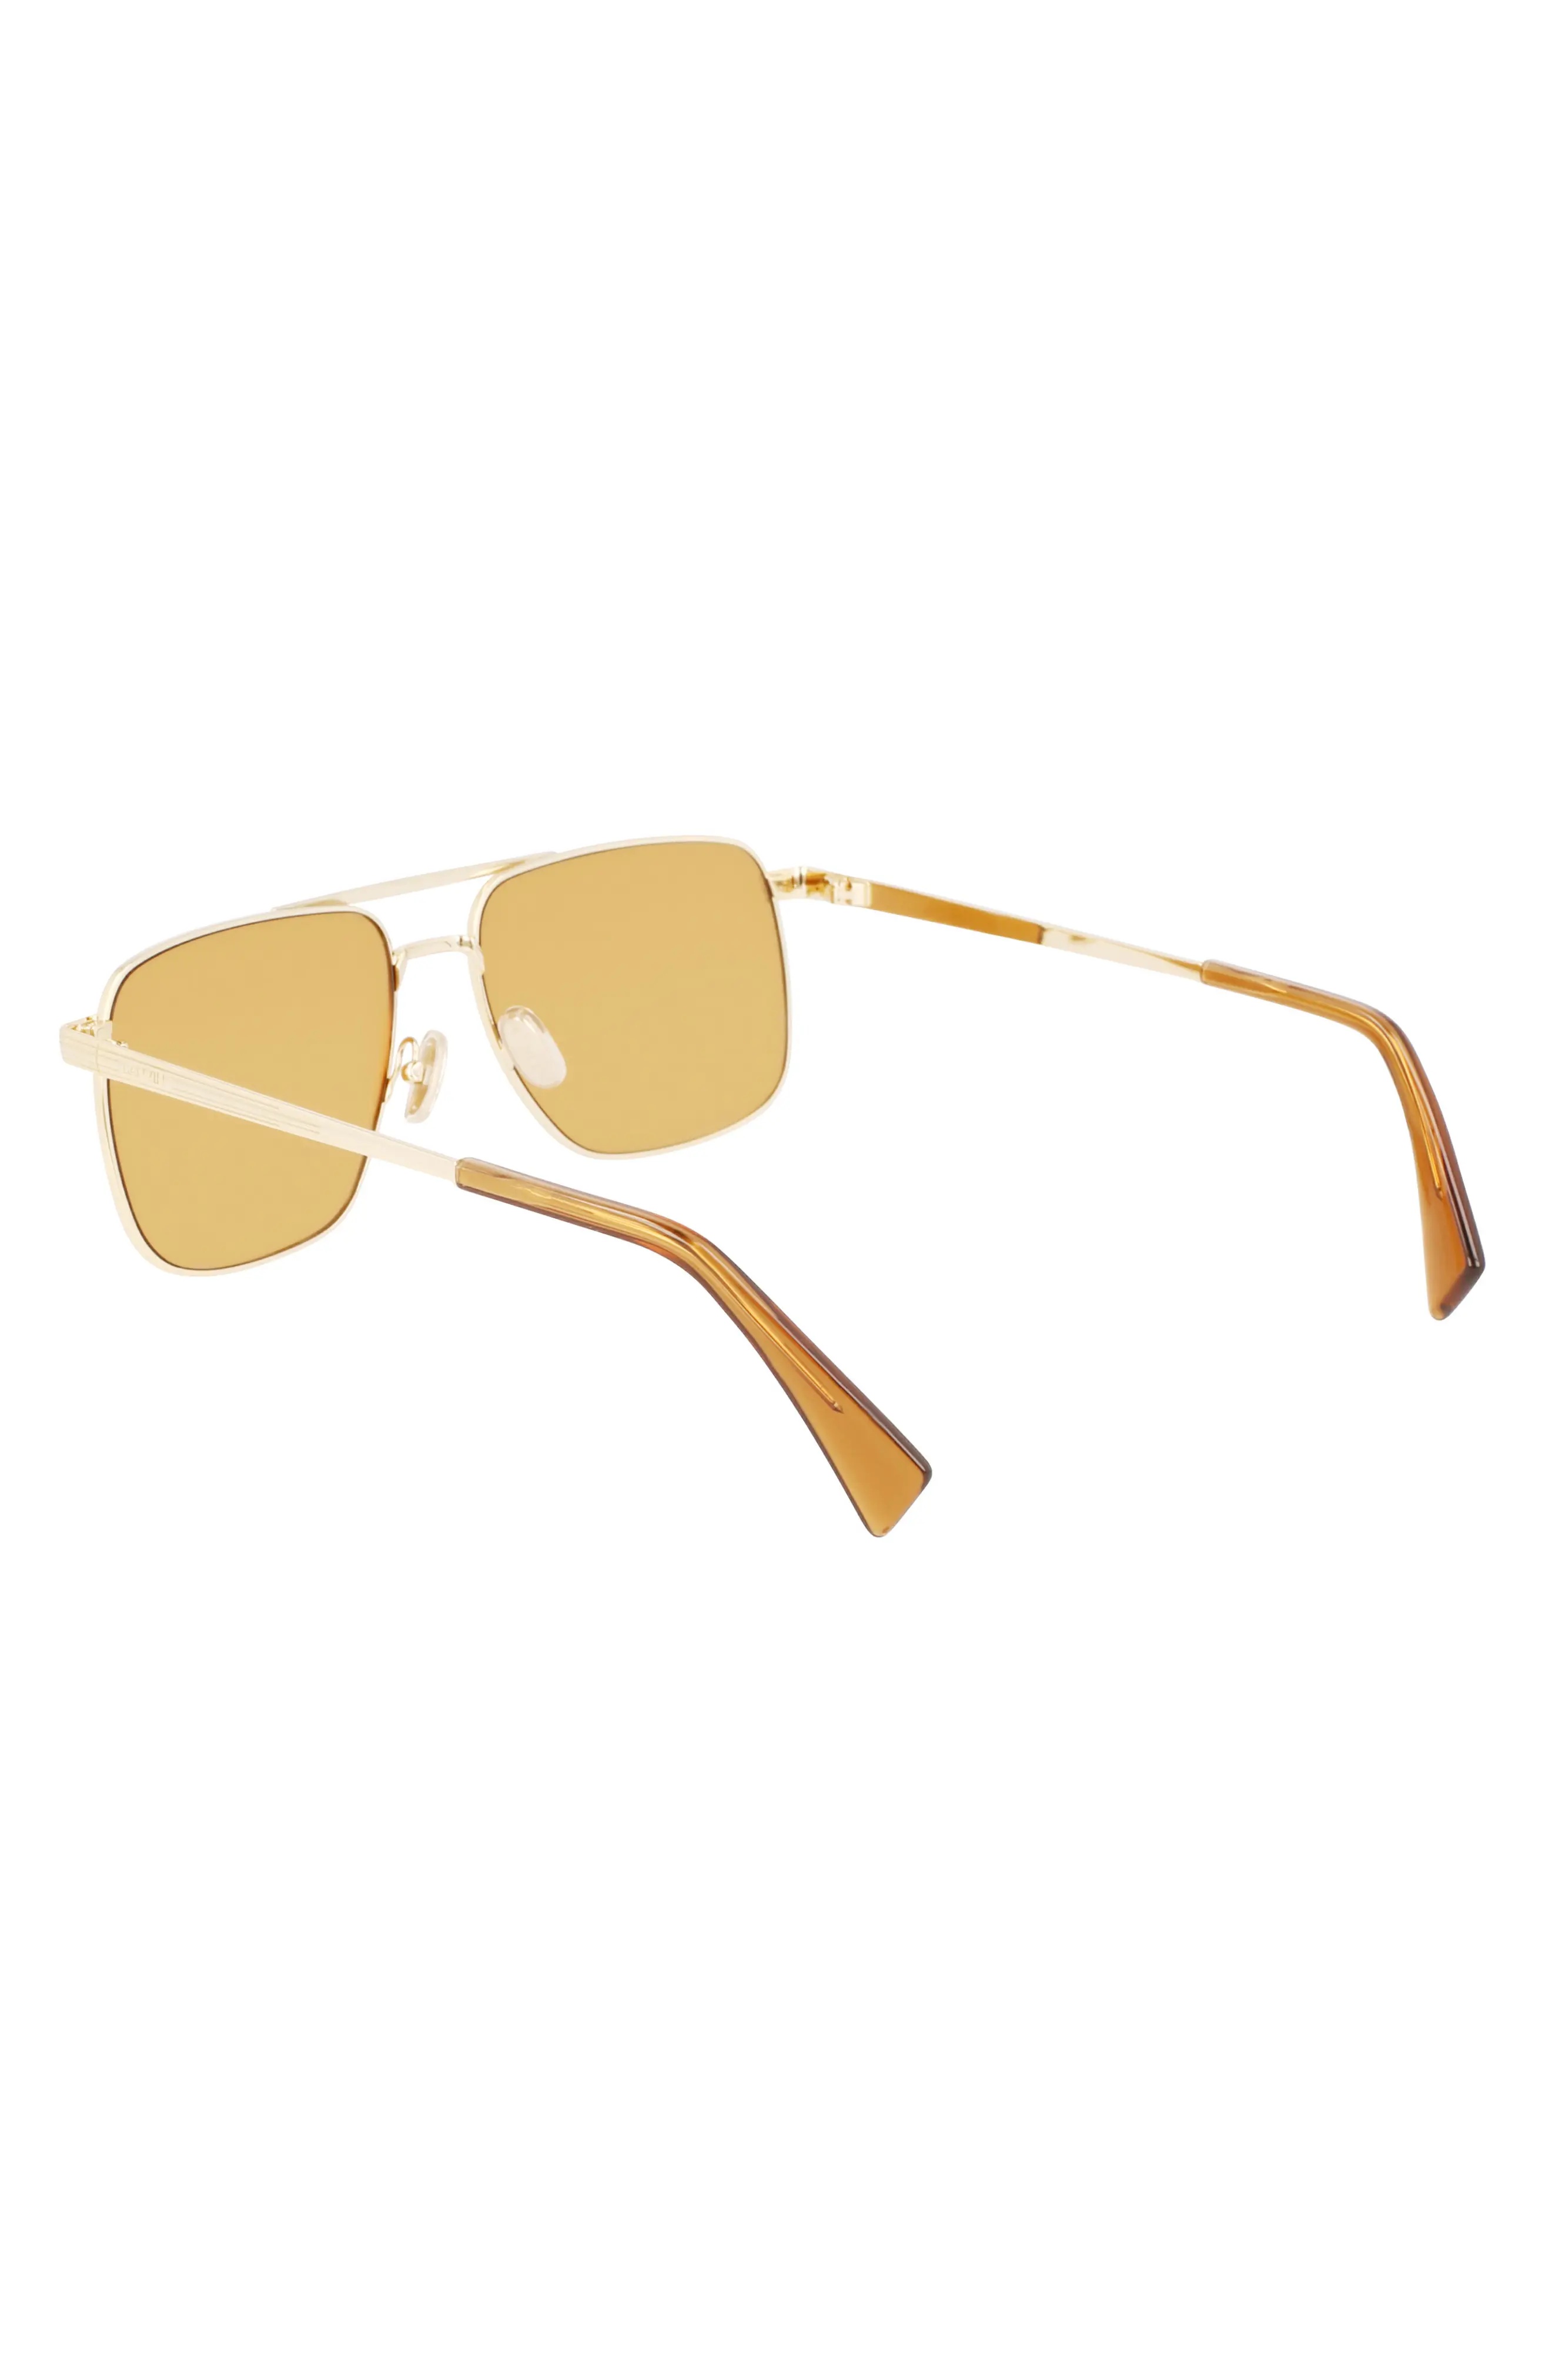 JL 58mm Rectangular Sunglasses in Gold /Caramel - 4